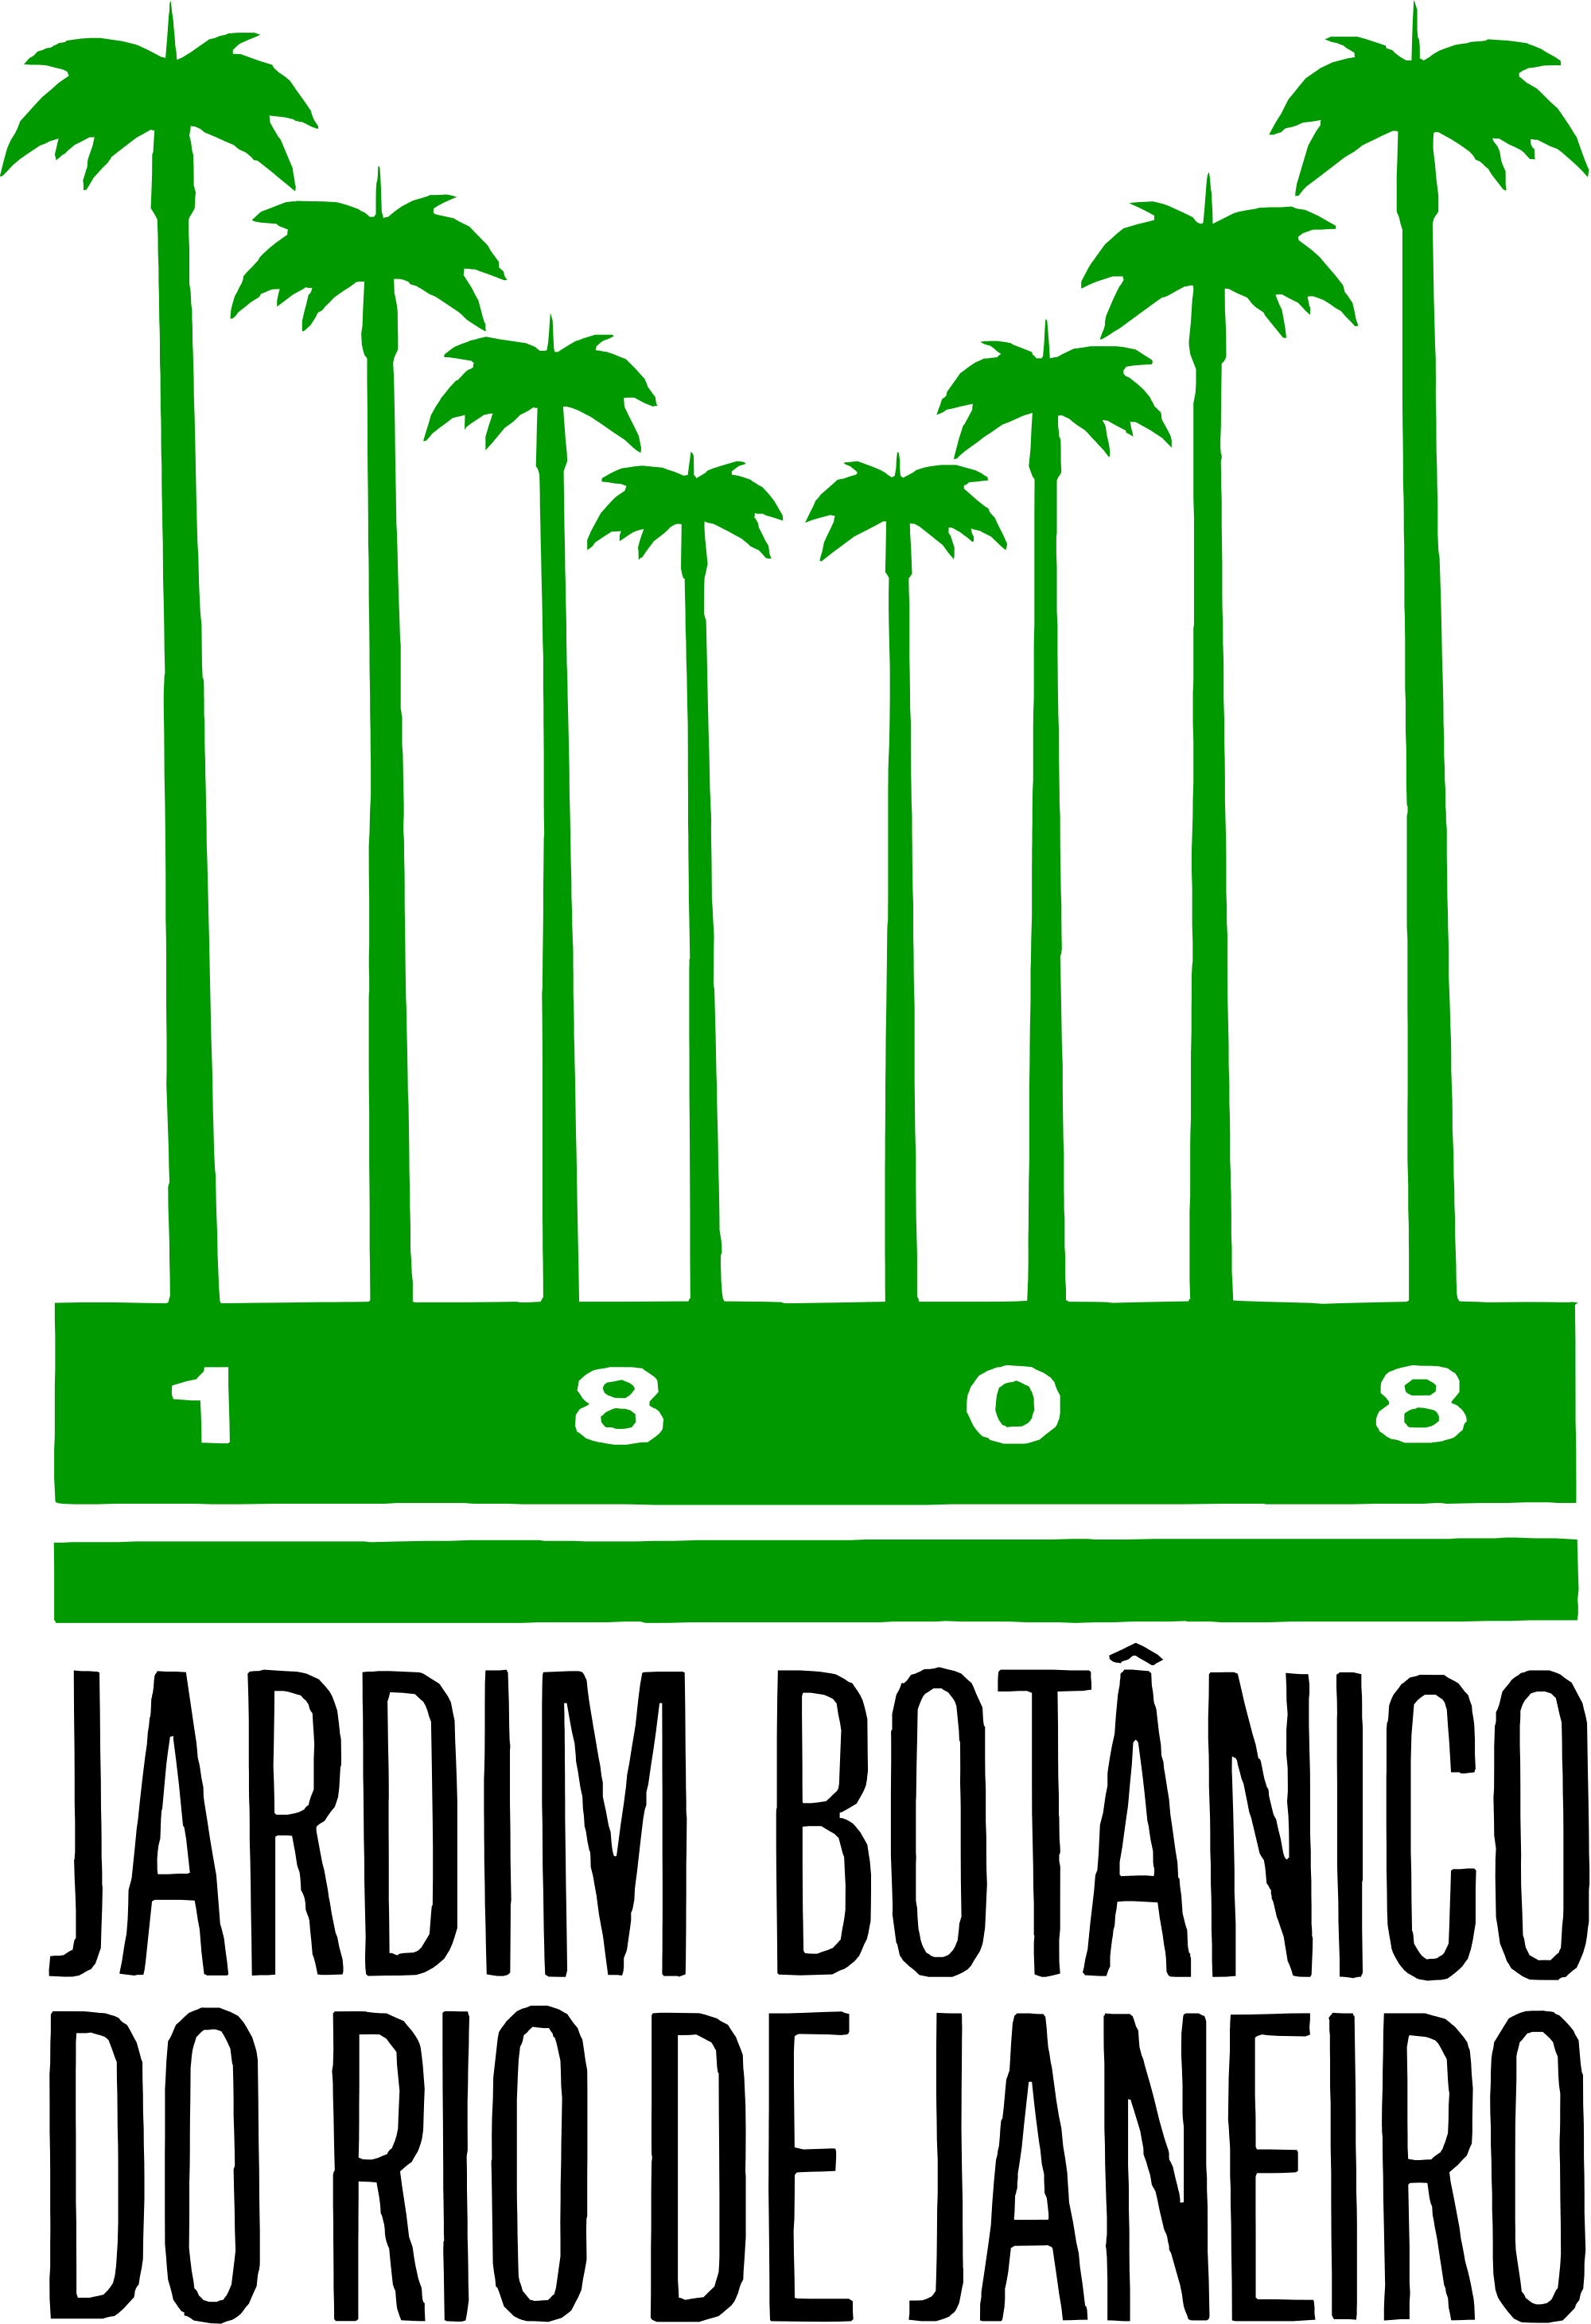 Jardim Botanico (RJ) logo.png